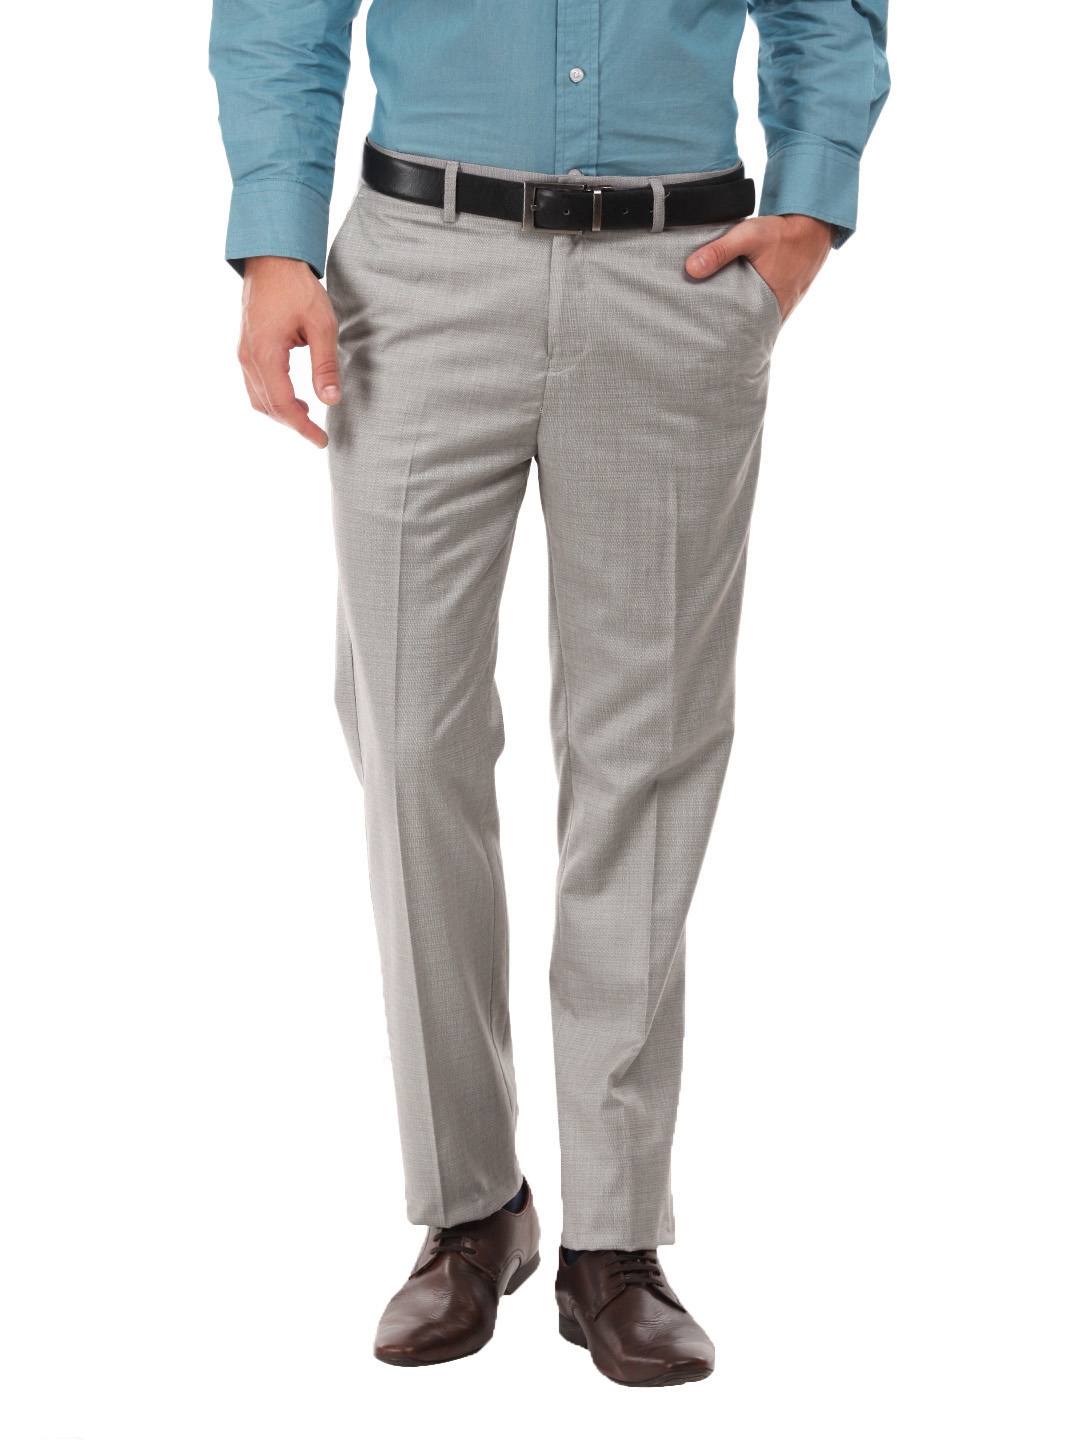 Buy Peter England Men Solid Regular Fit Formal Trouser  Black Online at  Low Prices in India  Paytmmallcom